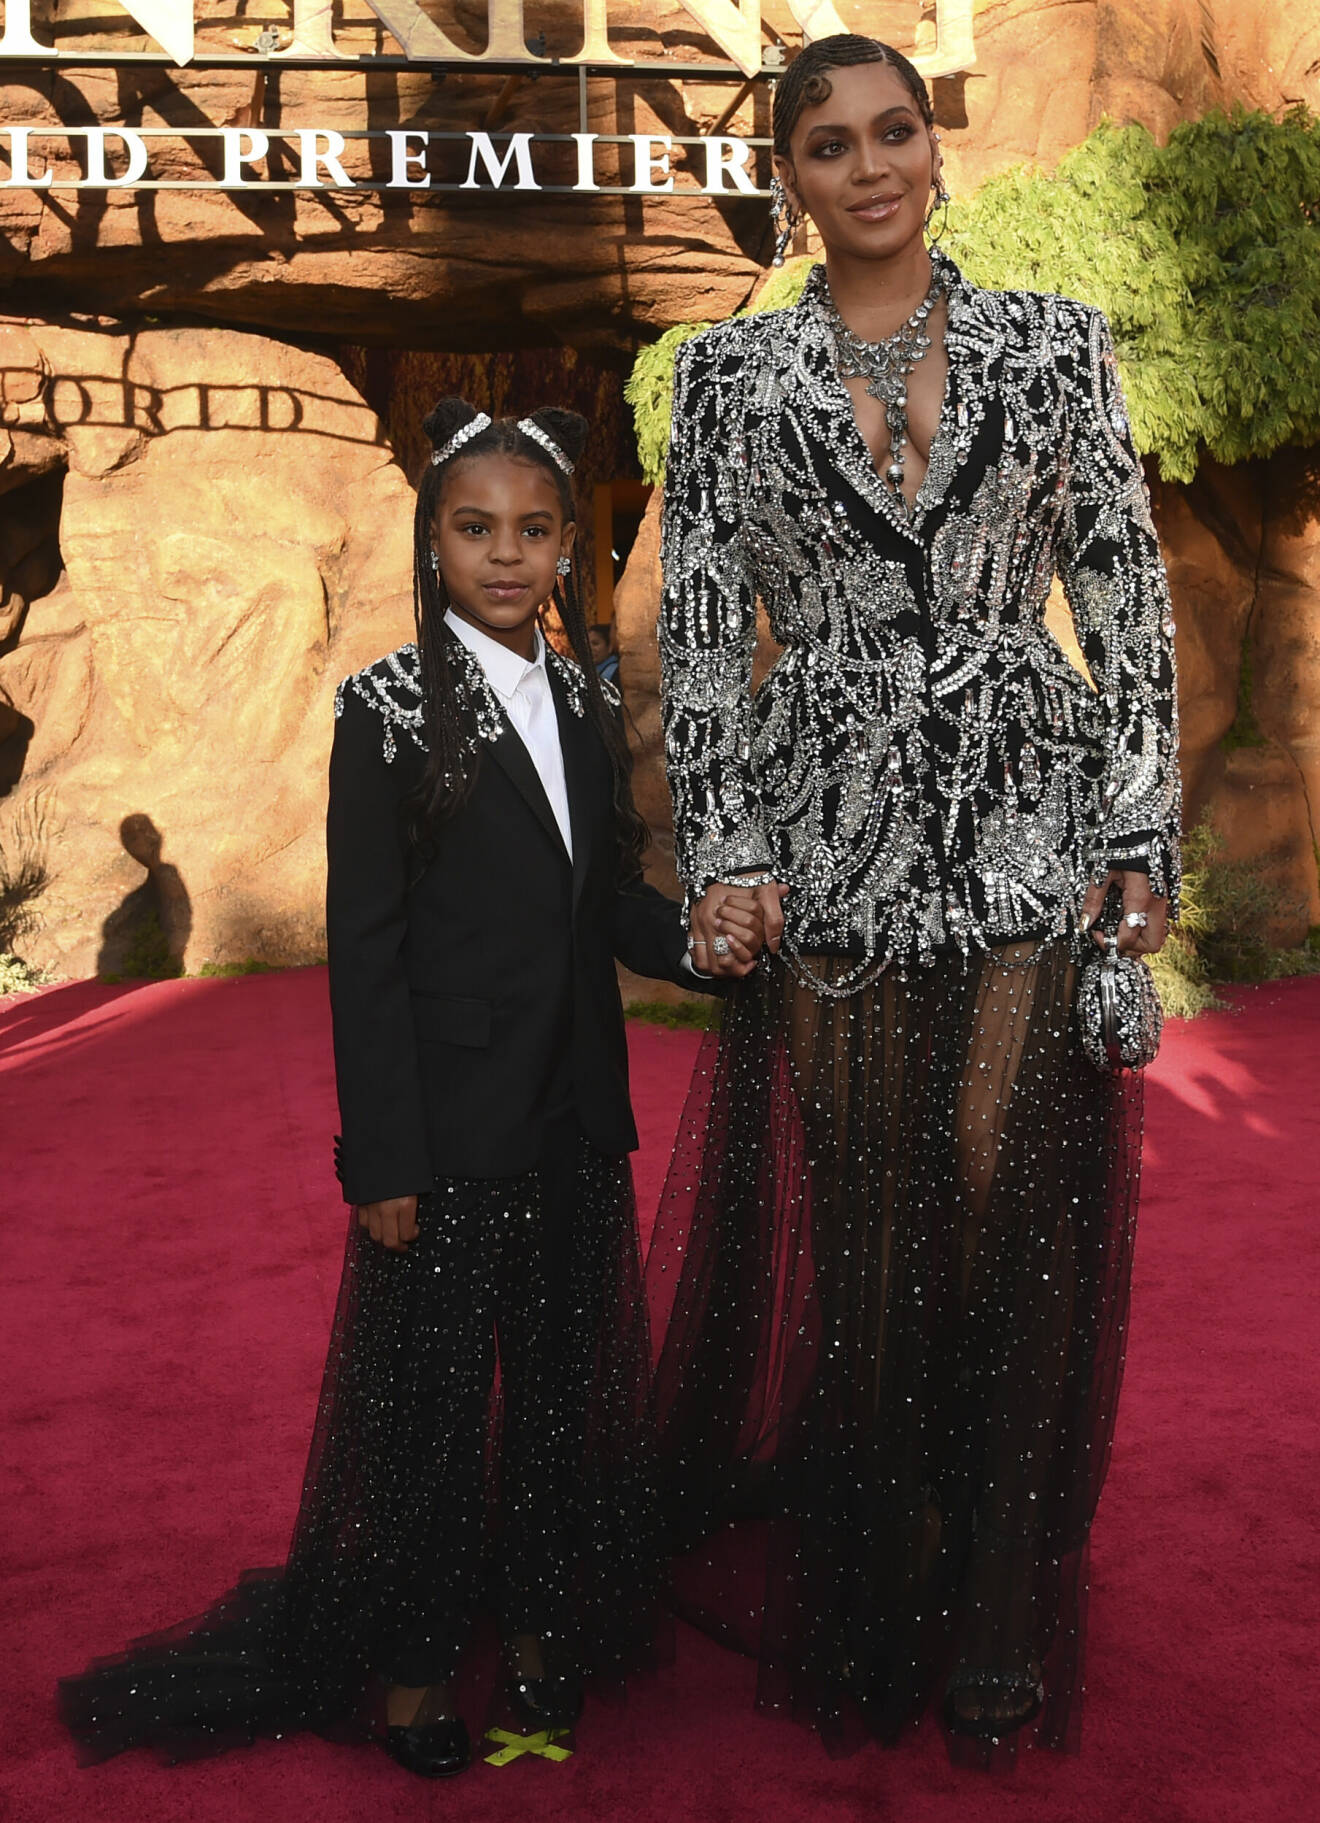 Beyonce matchar dottern Blue Ivy på röda mattan.